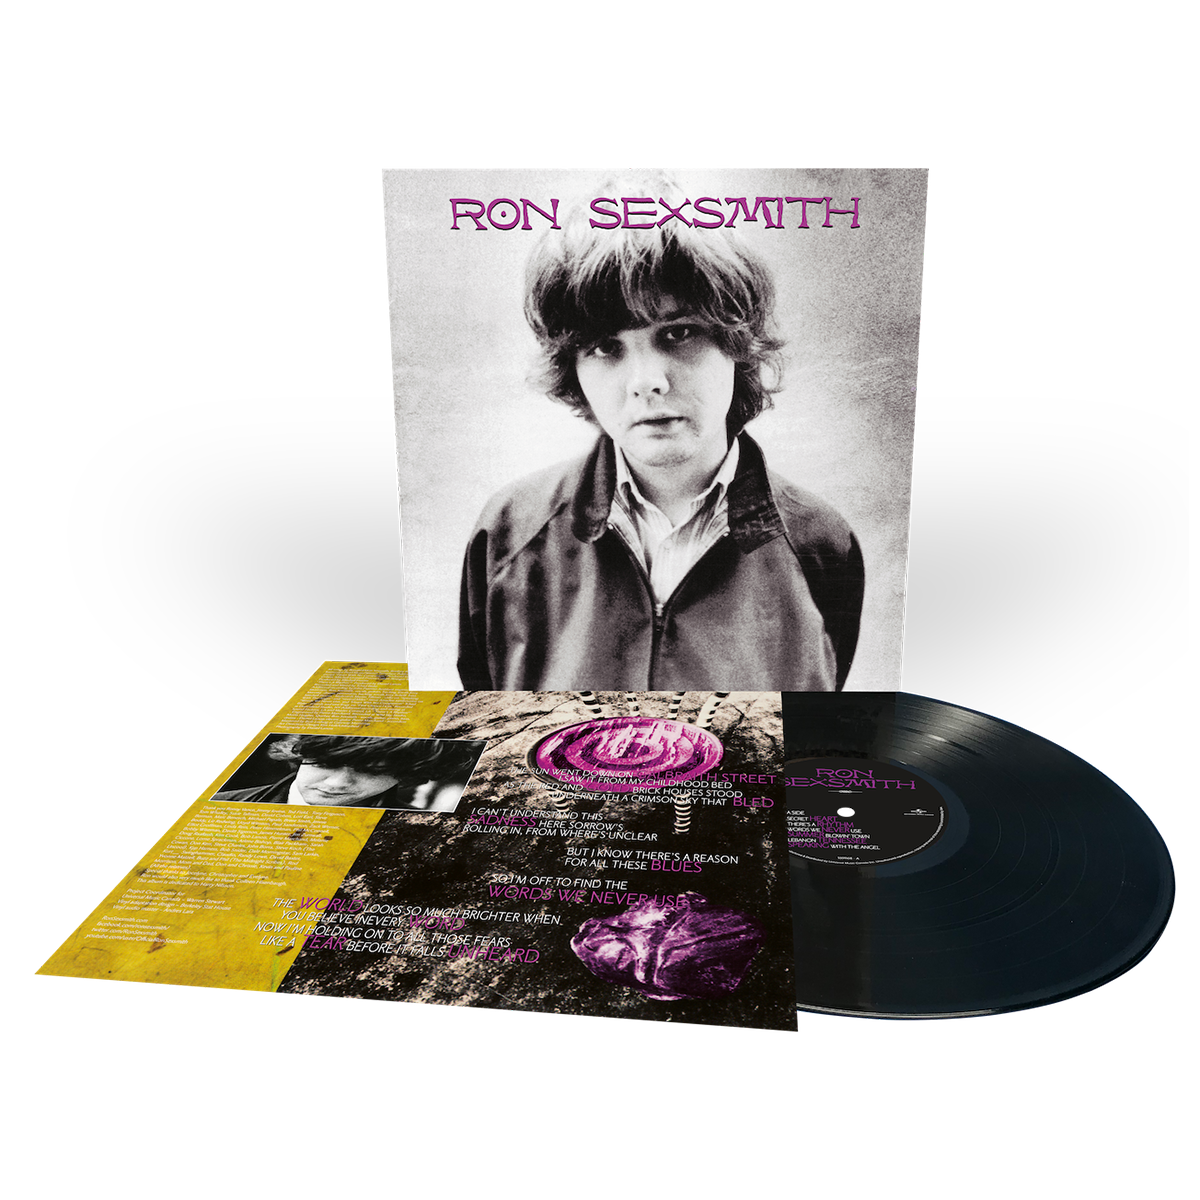 Ron Sexsmith Announces 25th Anniversary Vinyl Reissue OF Self-Titled Debut Album